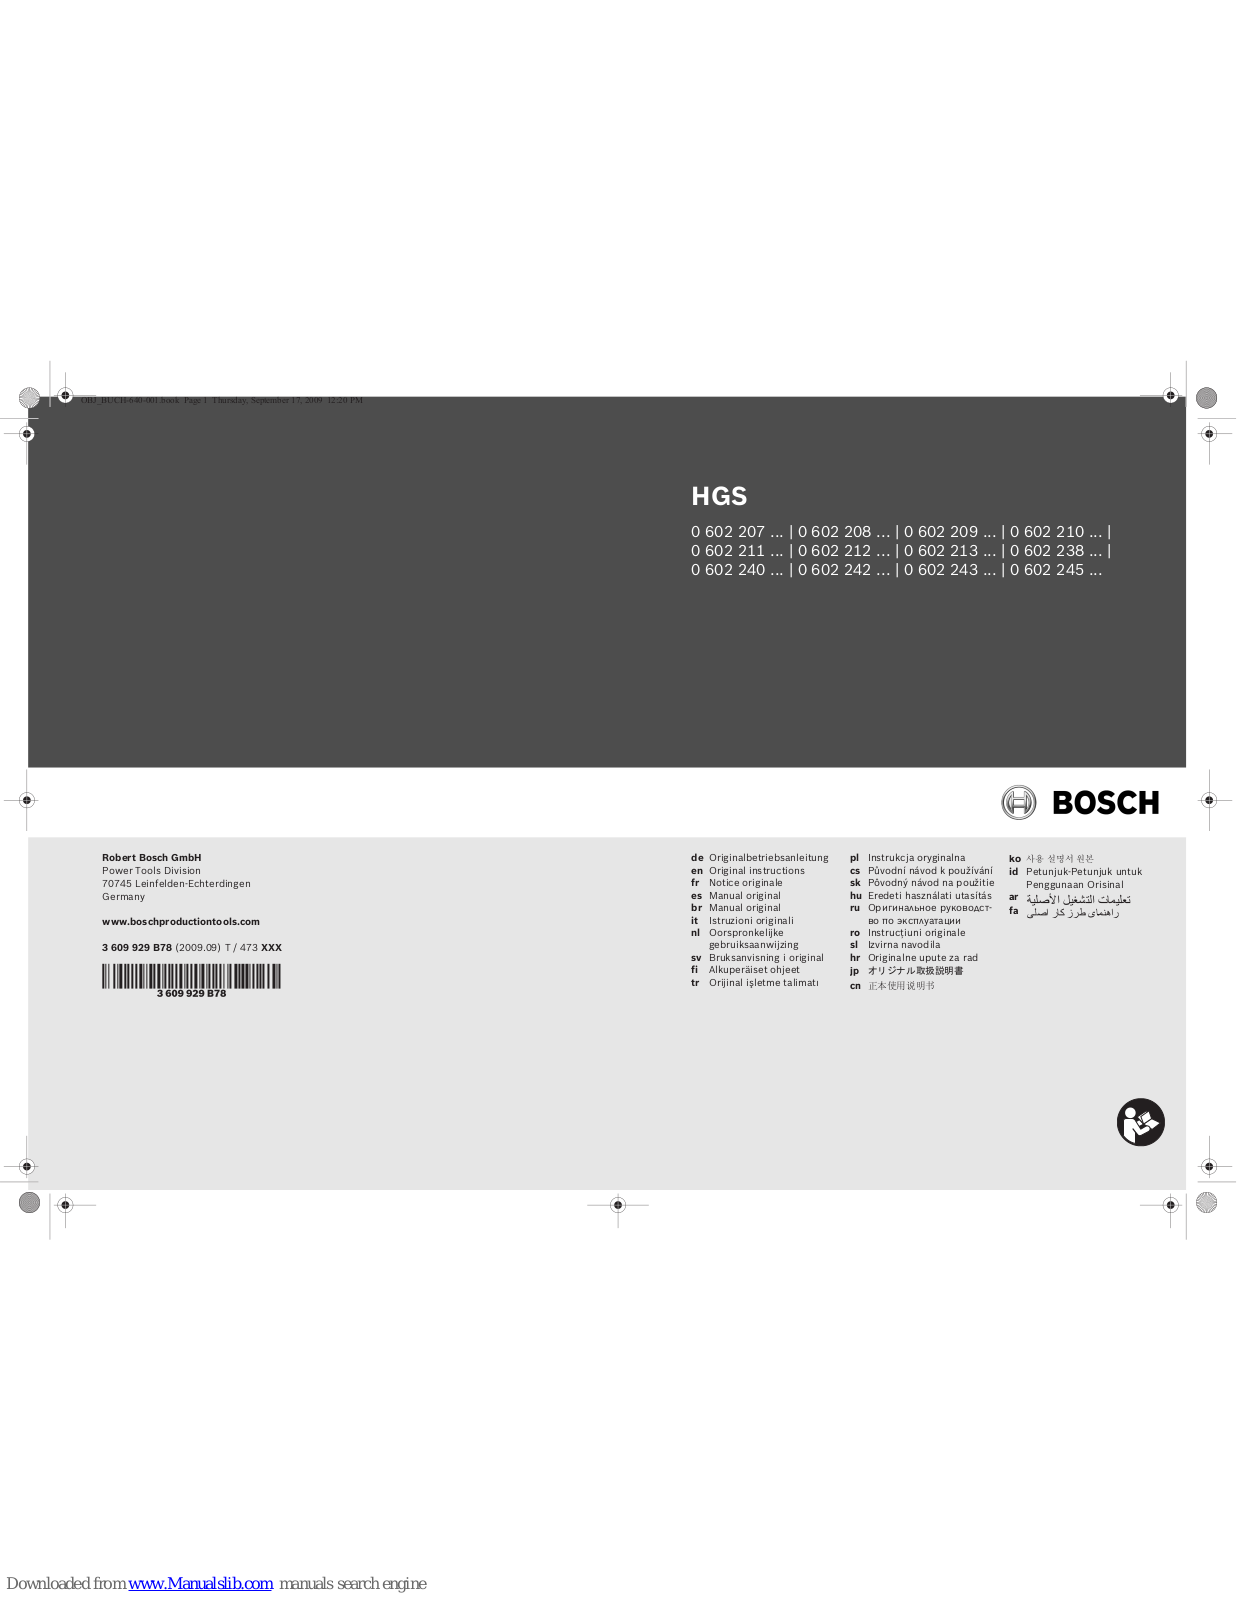 Bosch 0 602 207, 0 602 211, 0 602 212, 0 602 213, 0 602 240 Original Instructions Manual